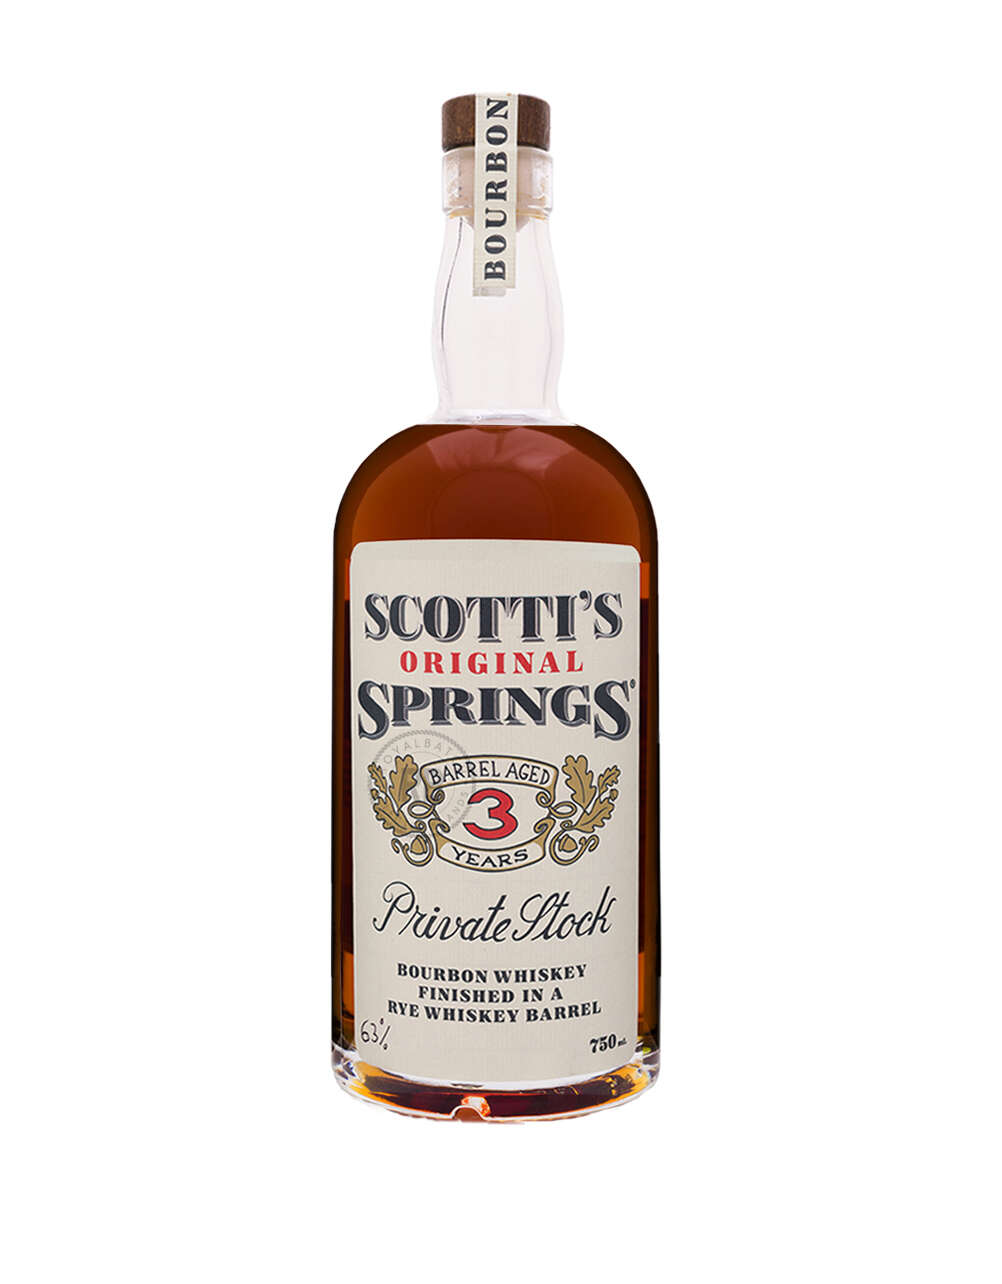 Scottis Original Springs Private Stock Barrel Aged 3 years Bourbon Whiskey